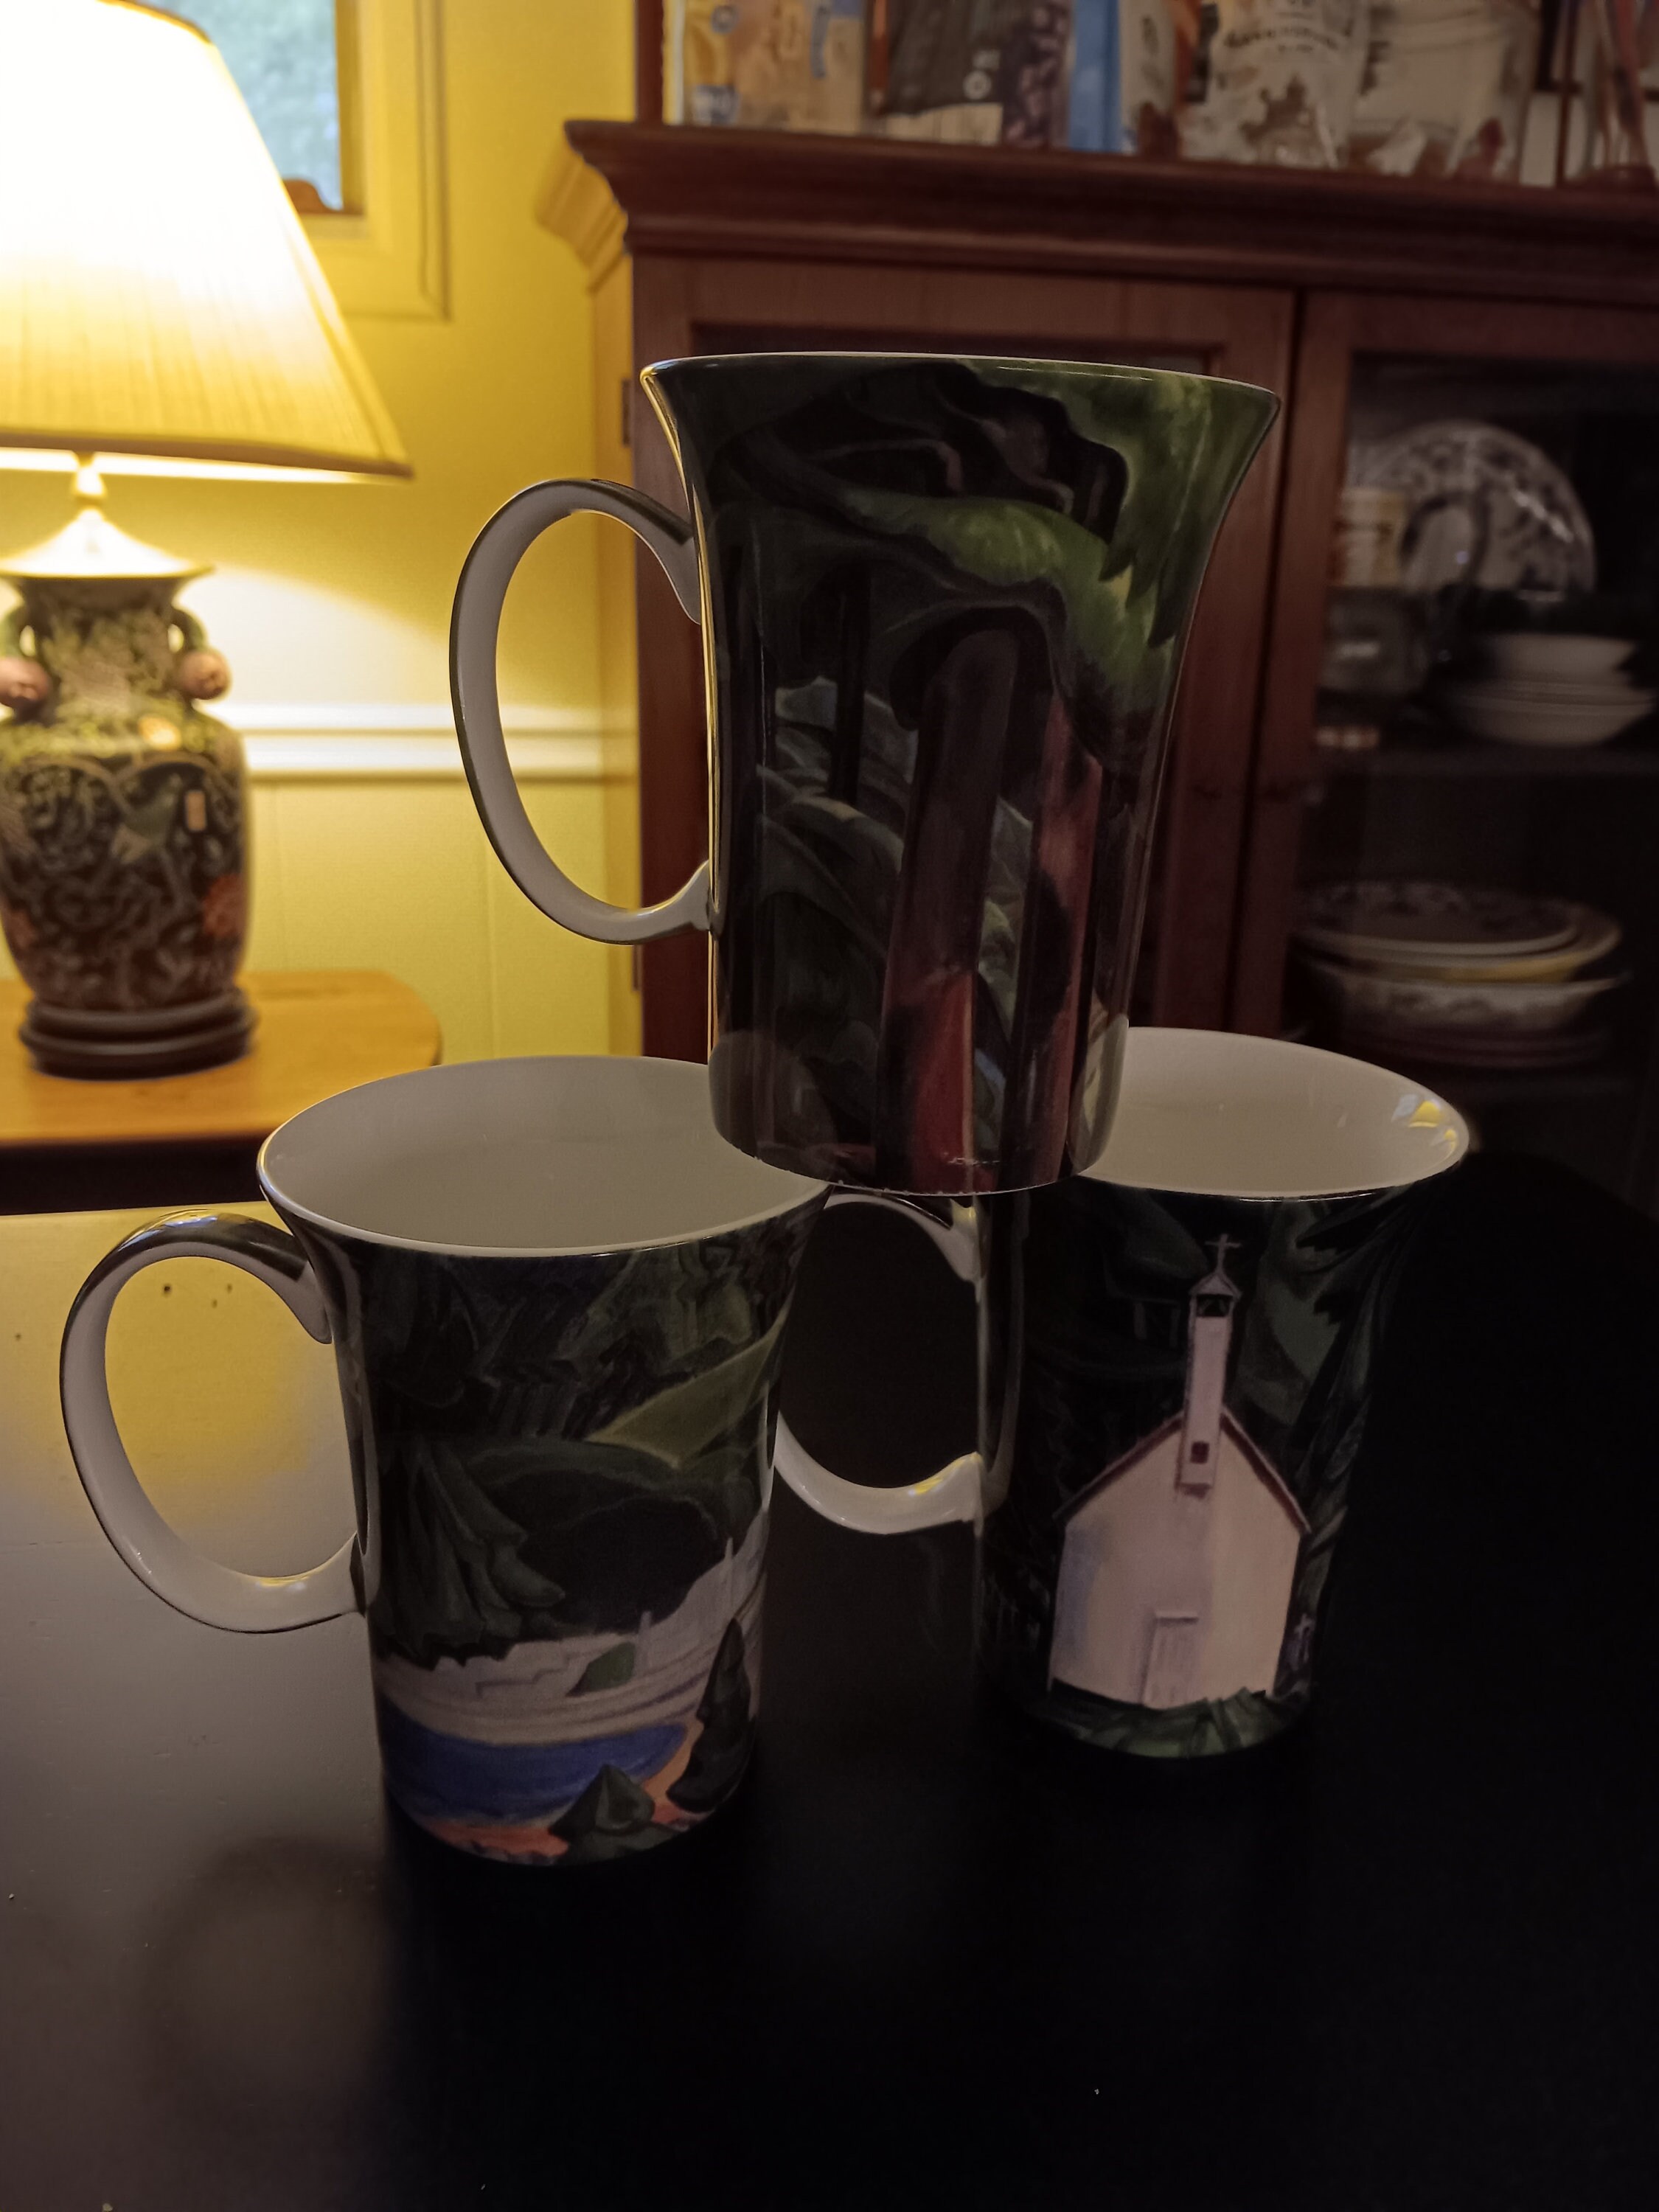 McIntosh Trading - Set of 2 Mugs - Van Gogh Flowers